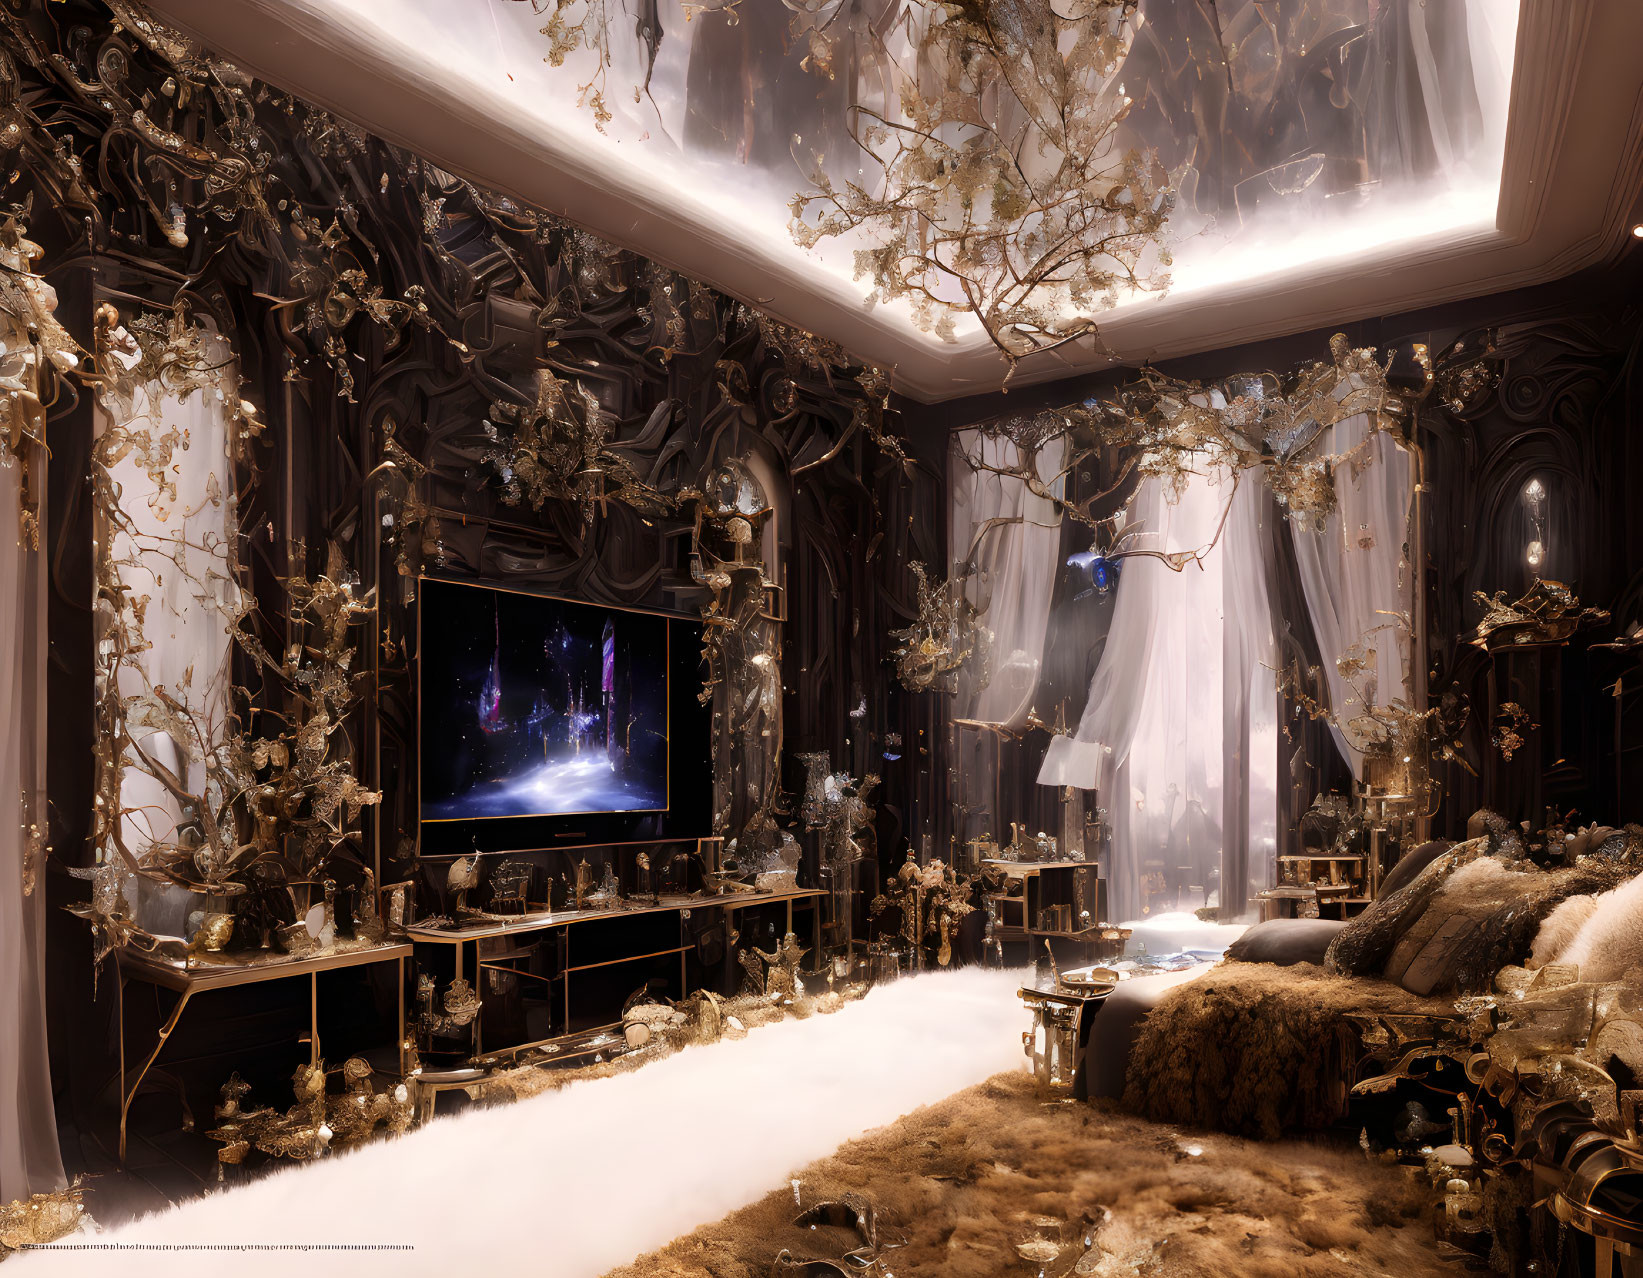 The Luxury Living Room